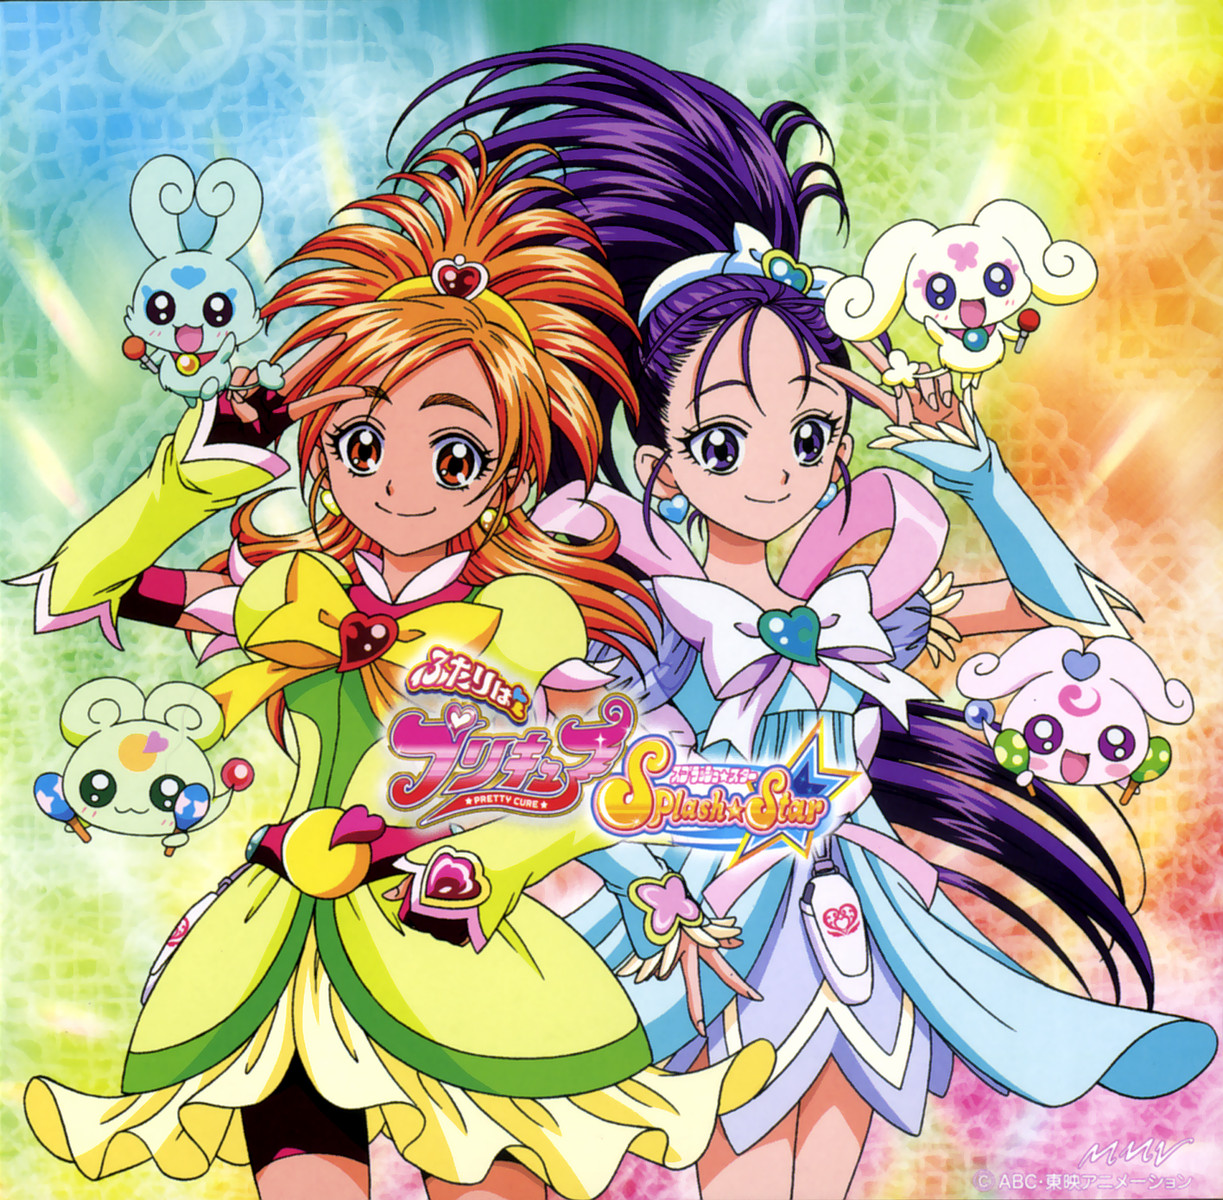 Splash Star Album: Ganbalance de Dance | Pretty Cure Wiki | Fandom